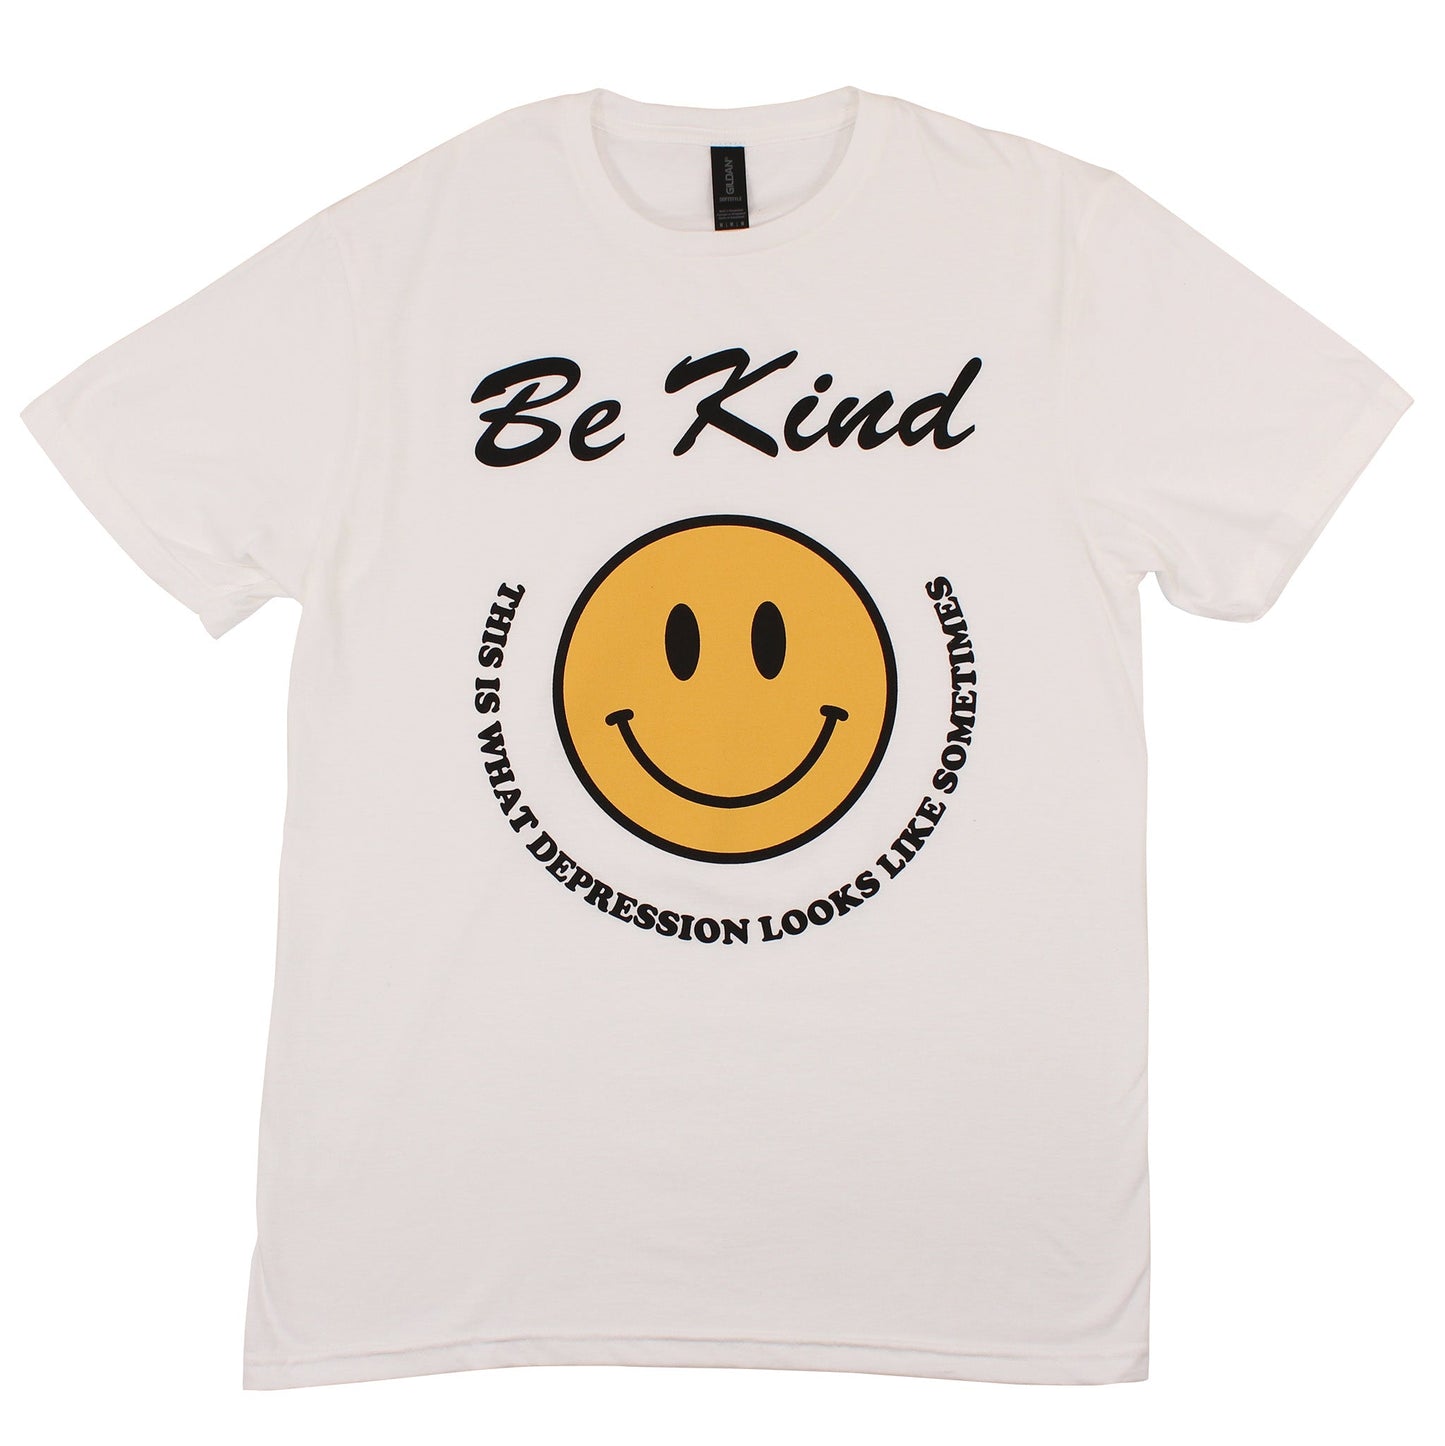 "Be Kind" Tee (White)